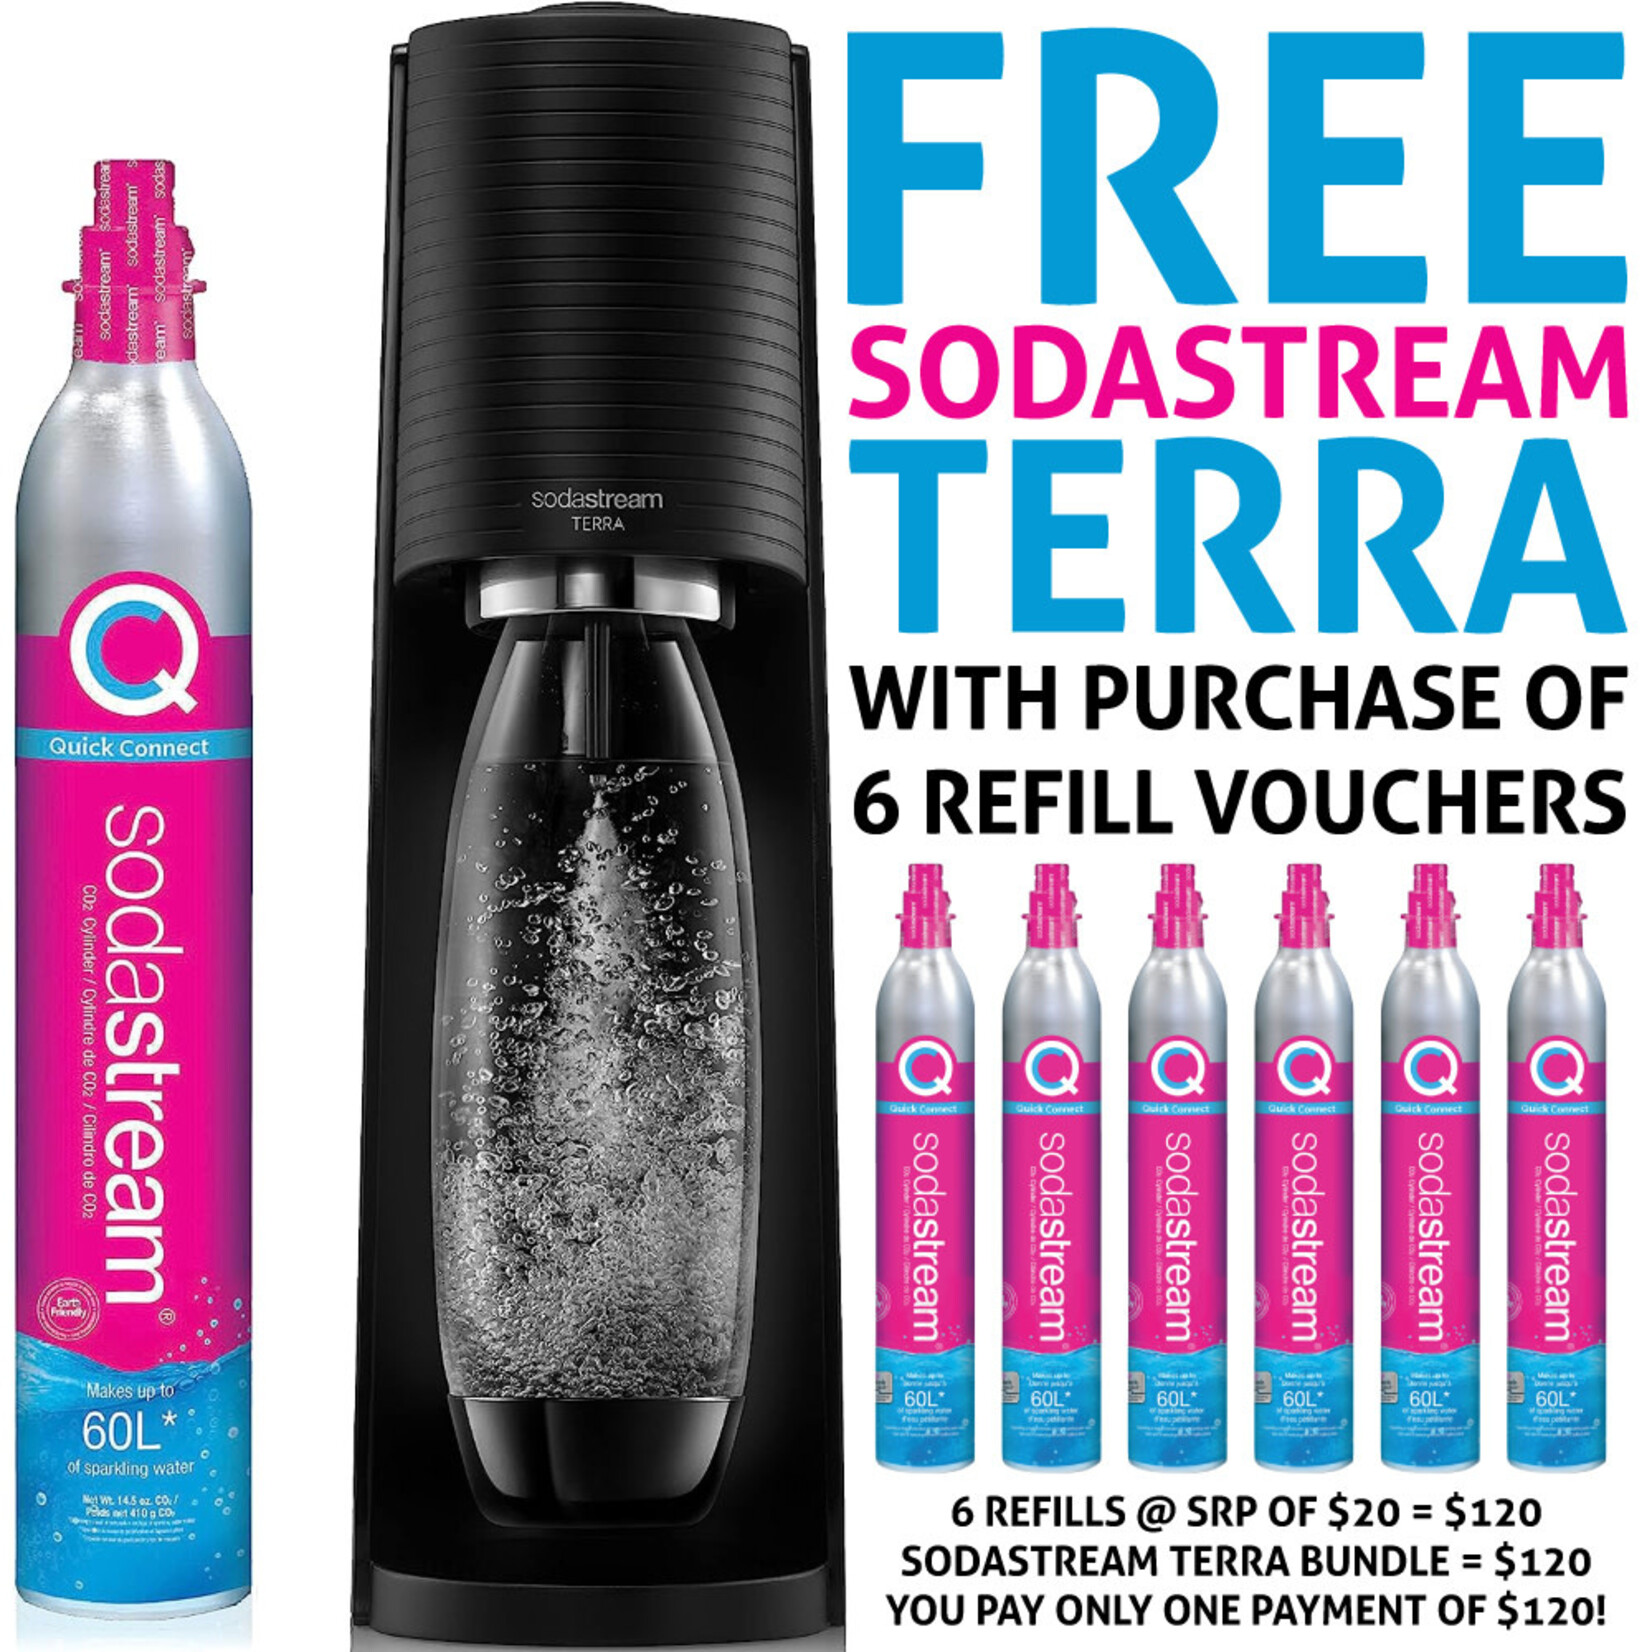 SodaStream Terra (Black) with 6 Refill Vouchers